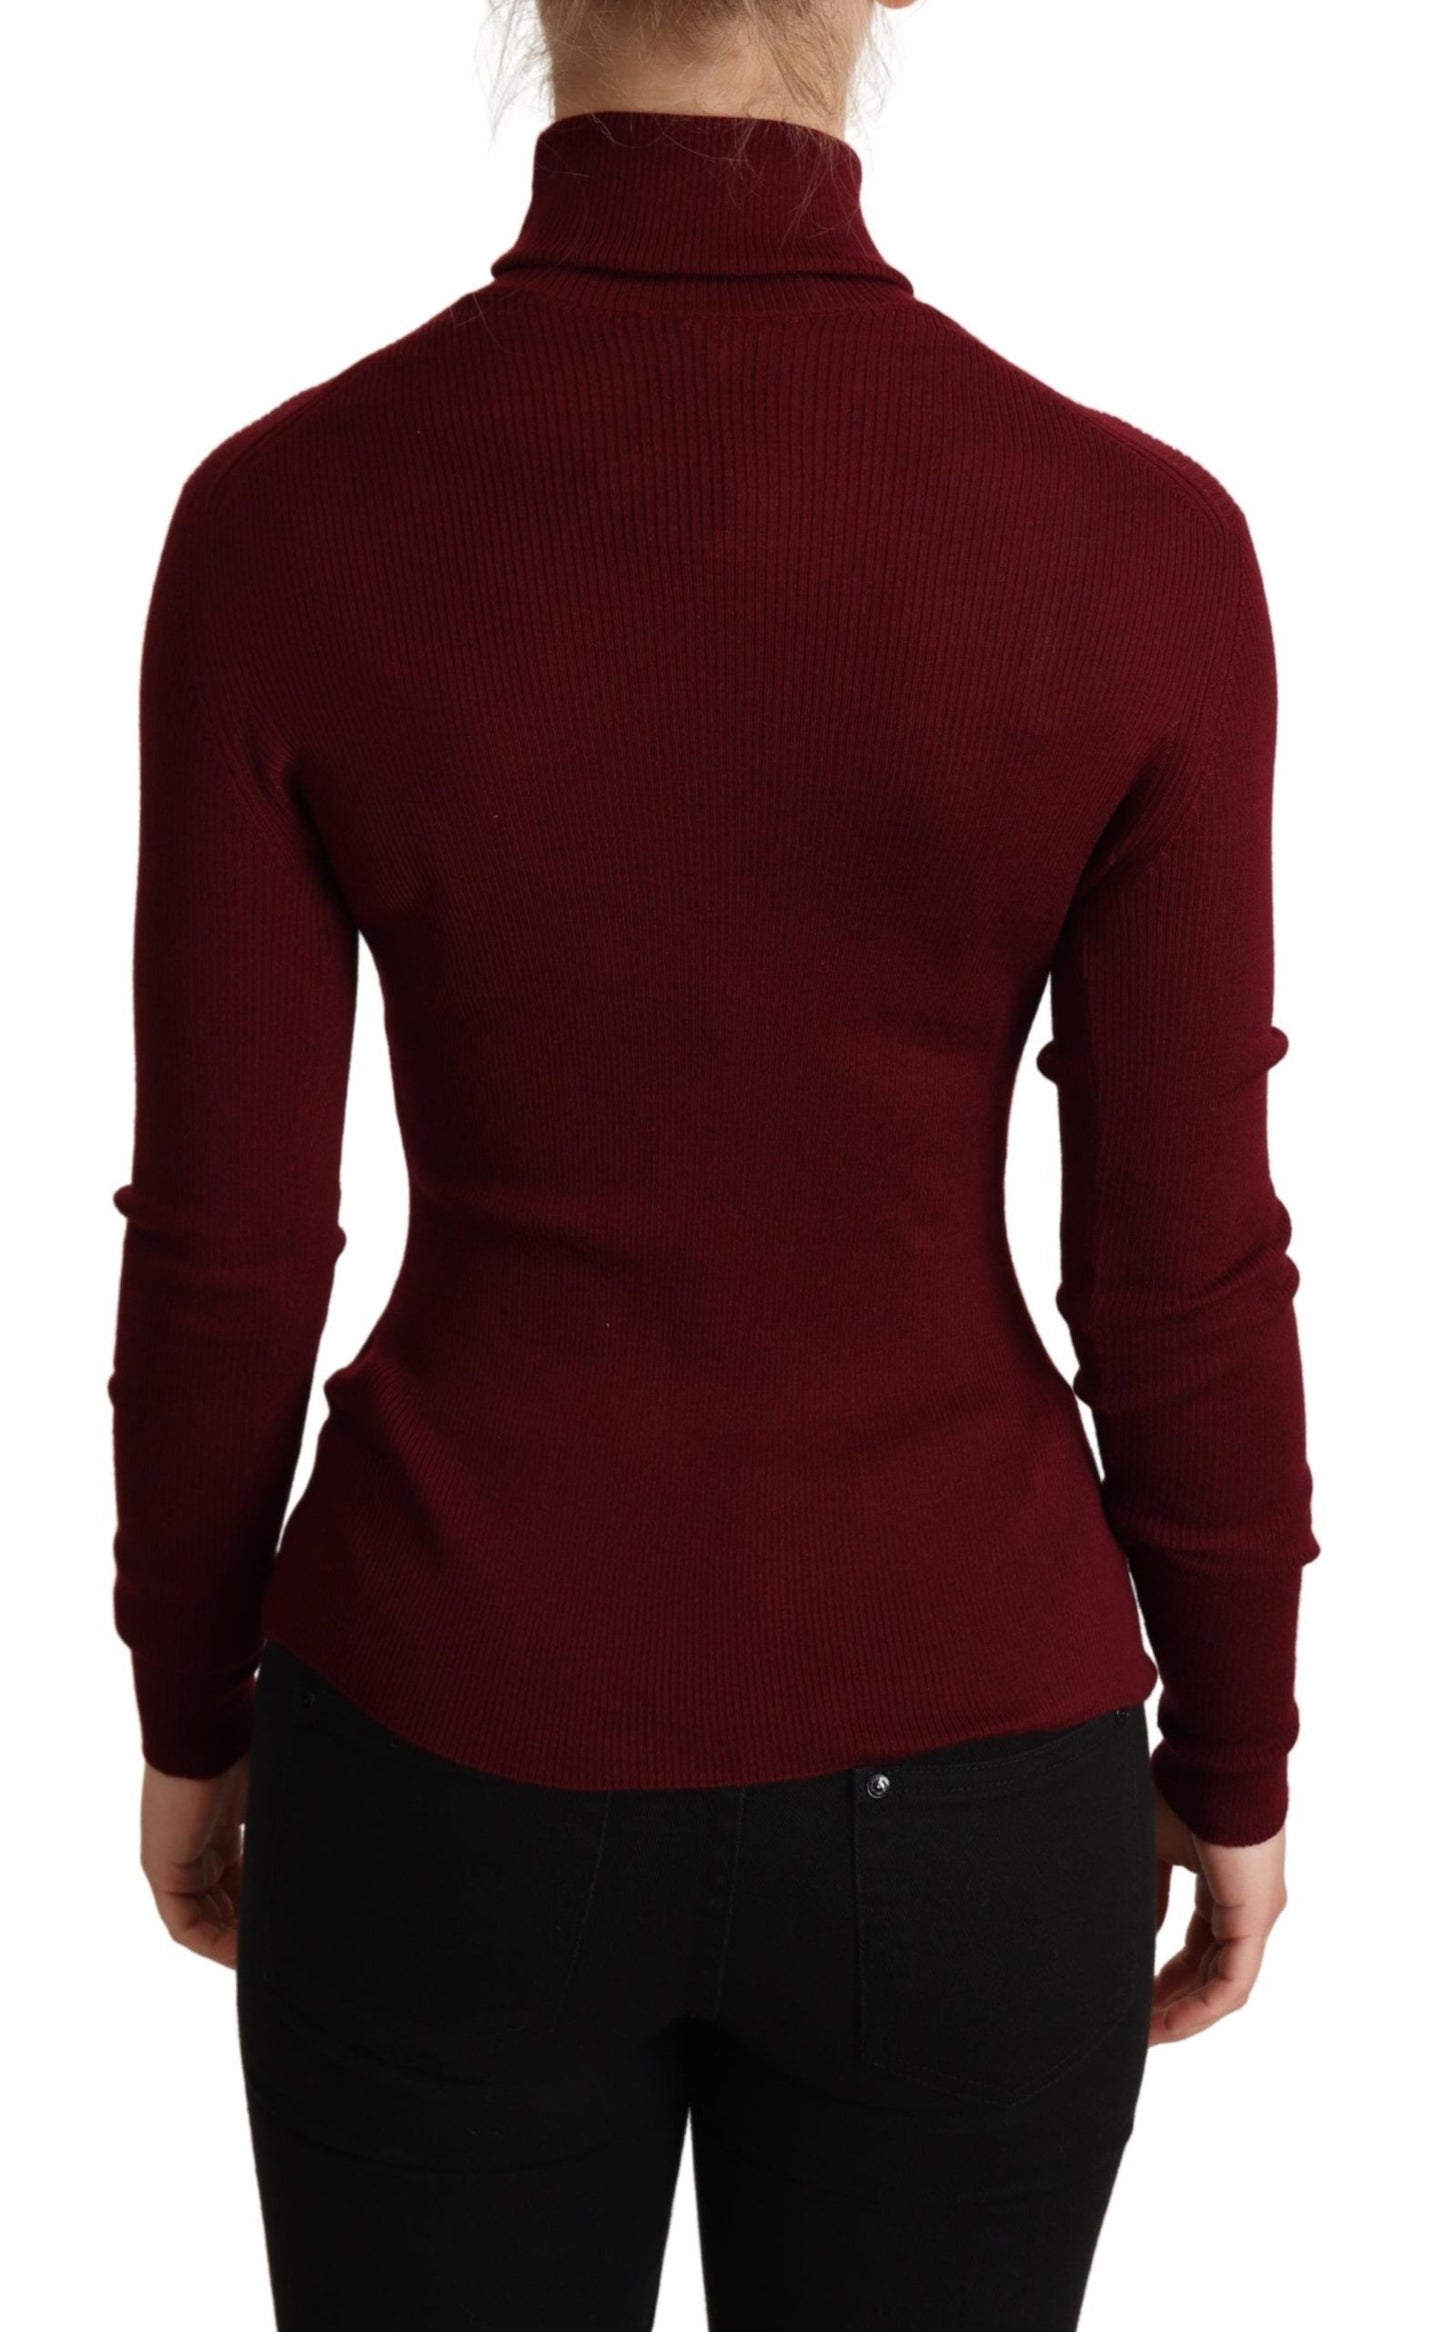 Elegant Bordeaux Turtle Neck Sweater